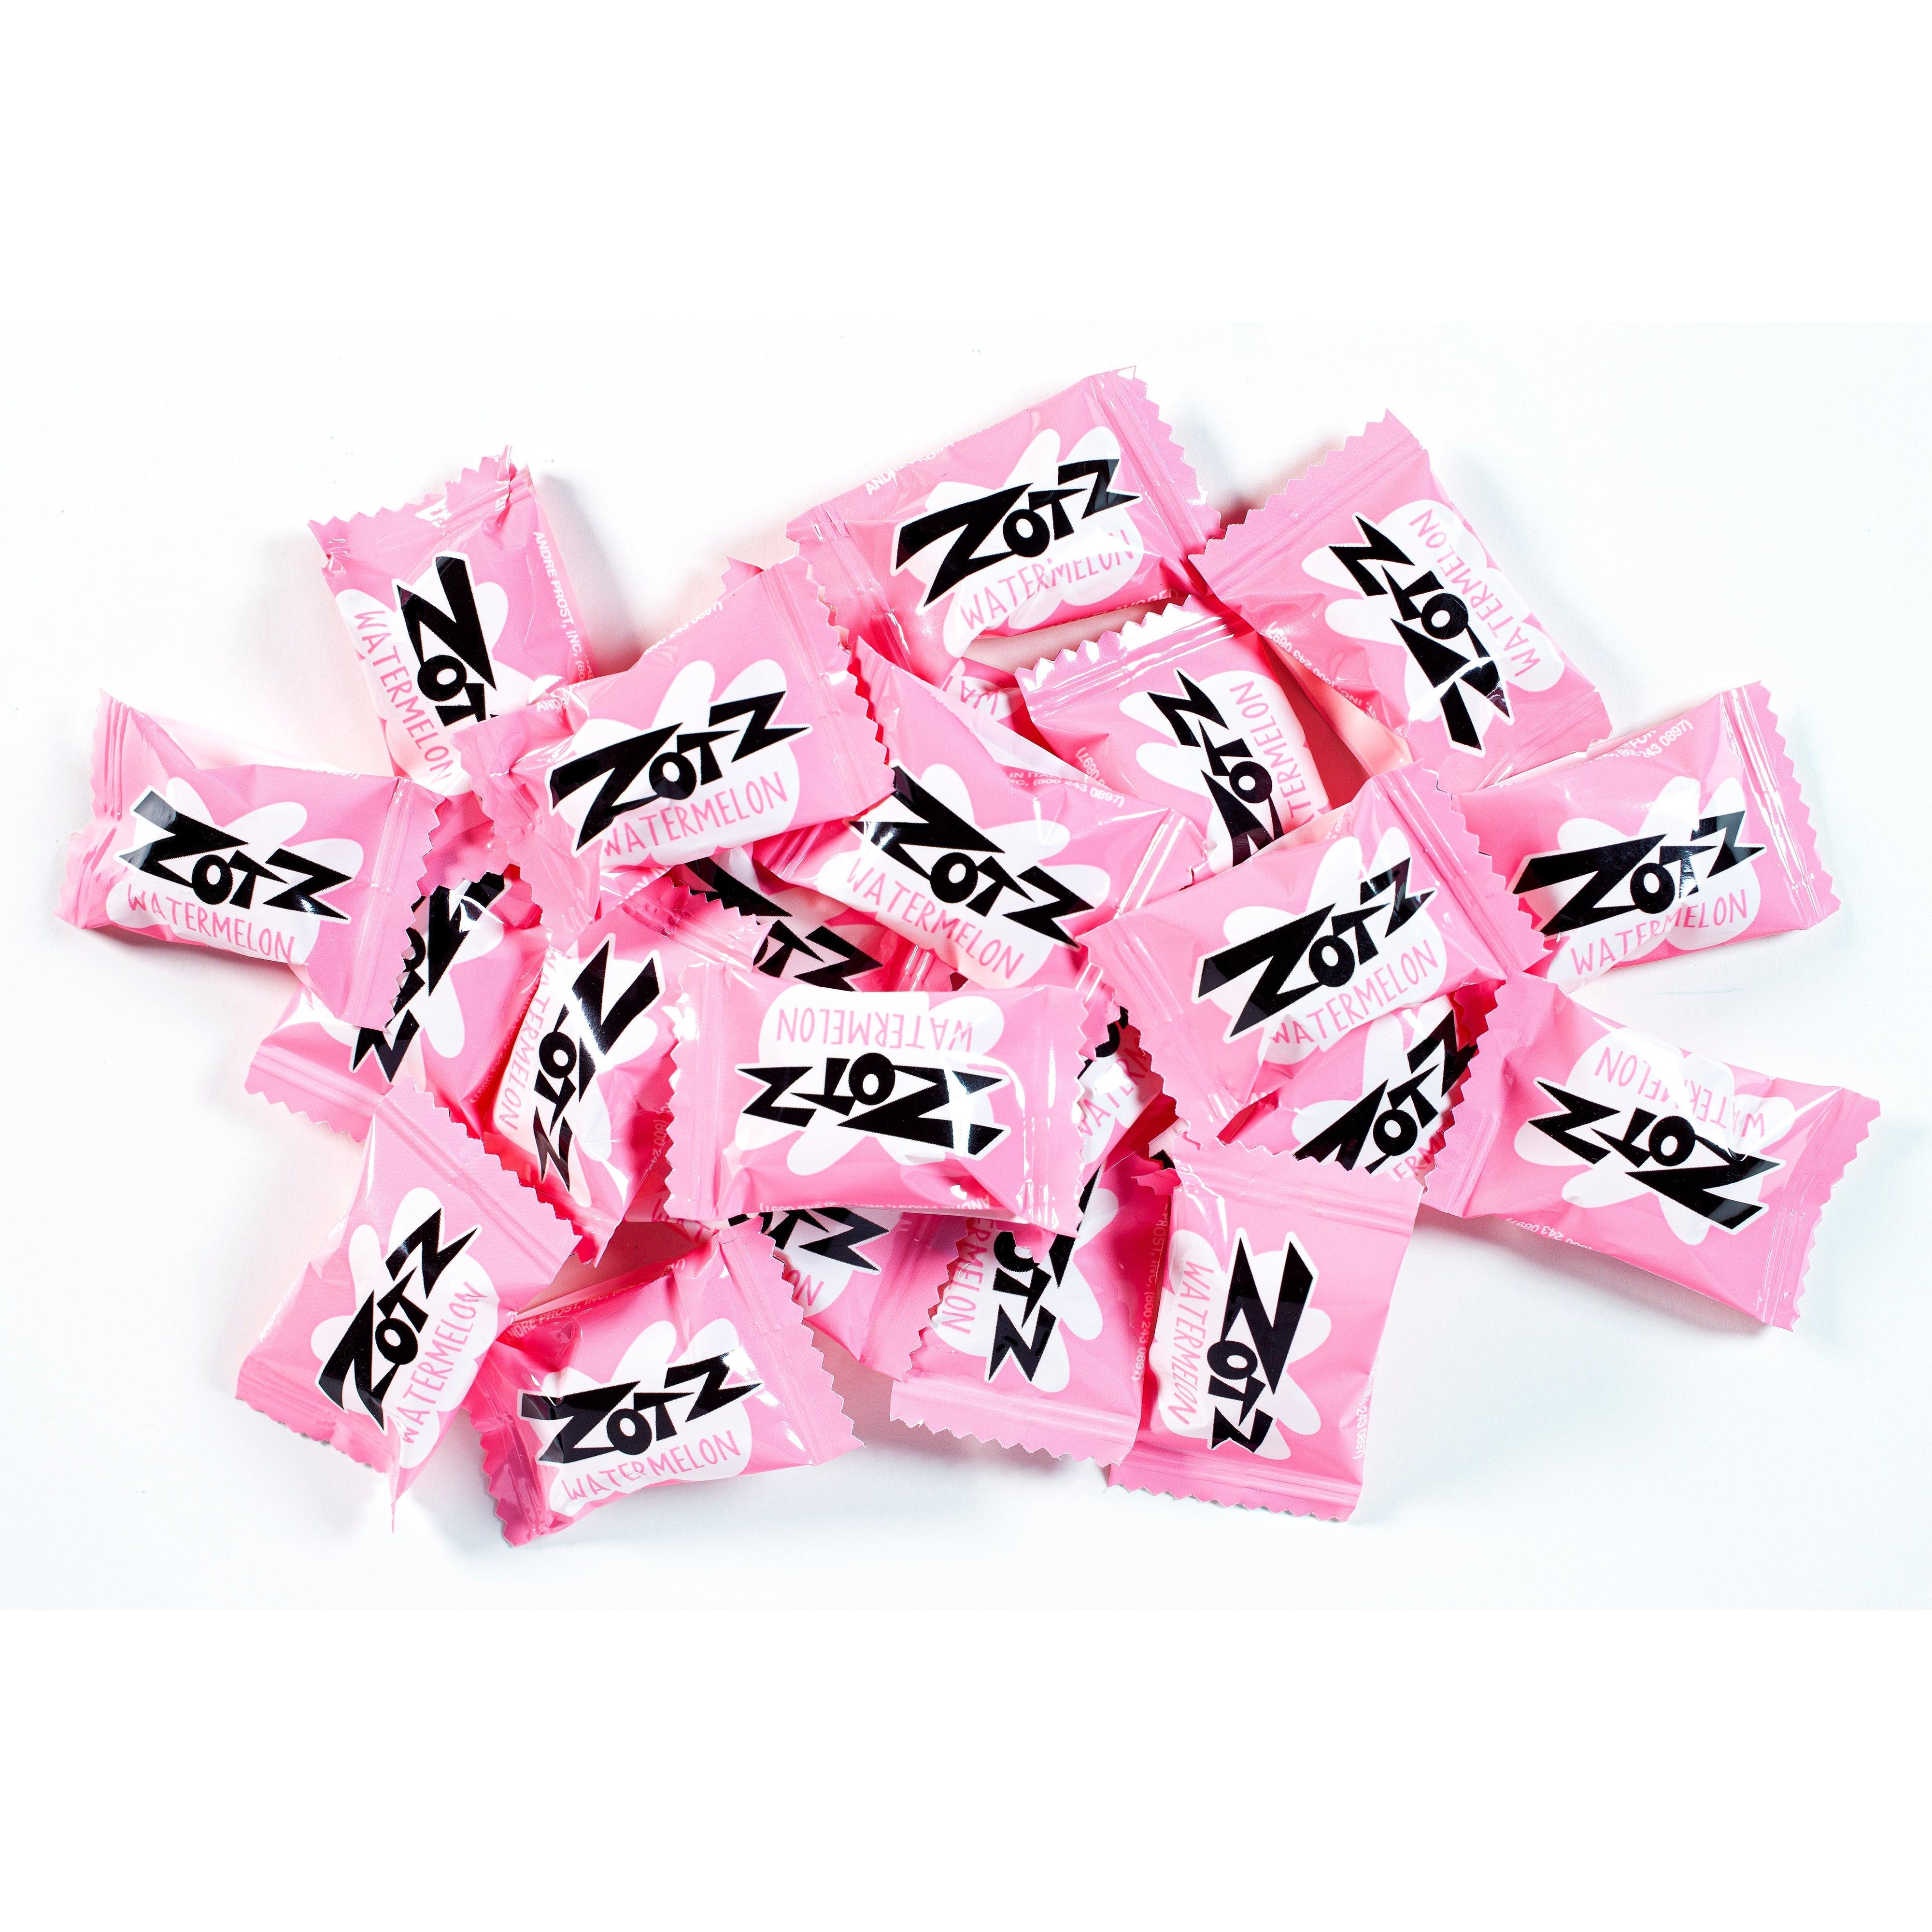 Zotz Assorted Flavors Candy 15lb